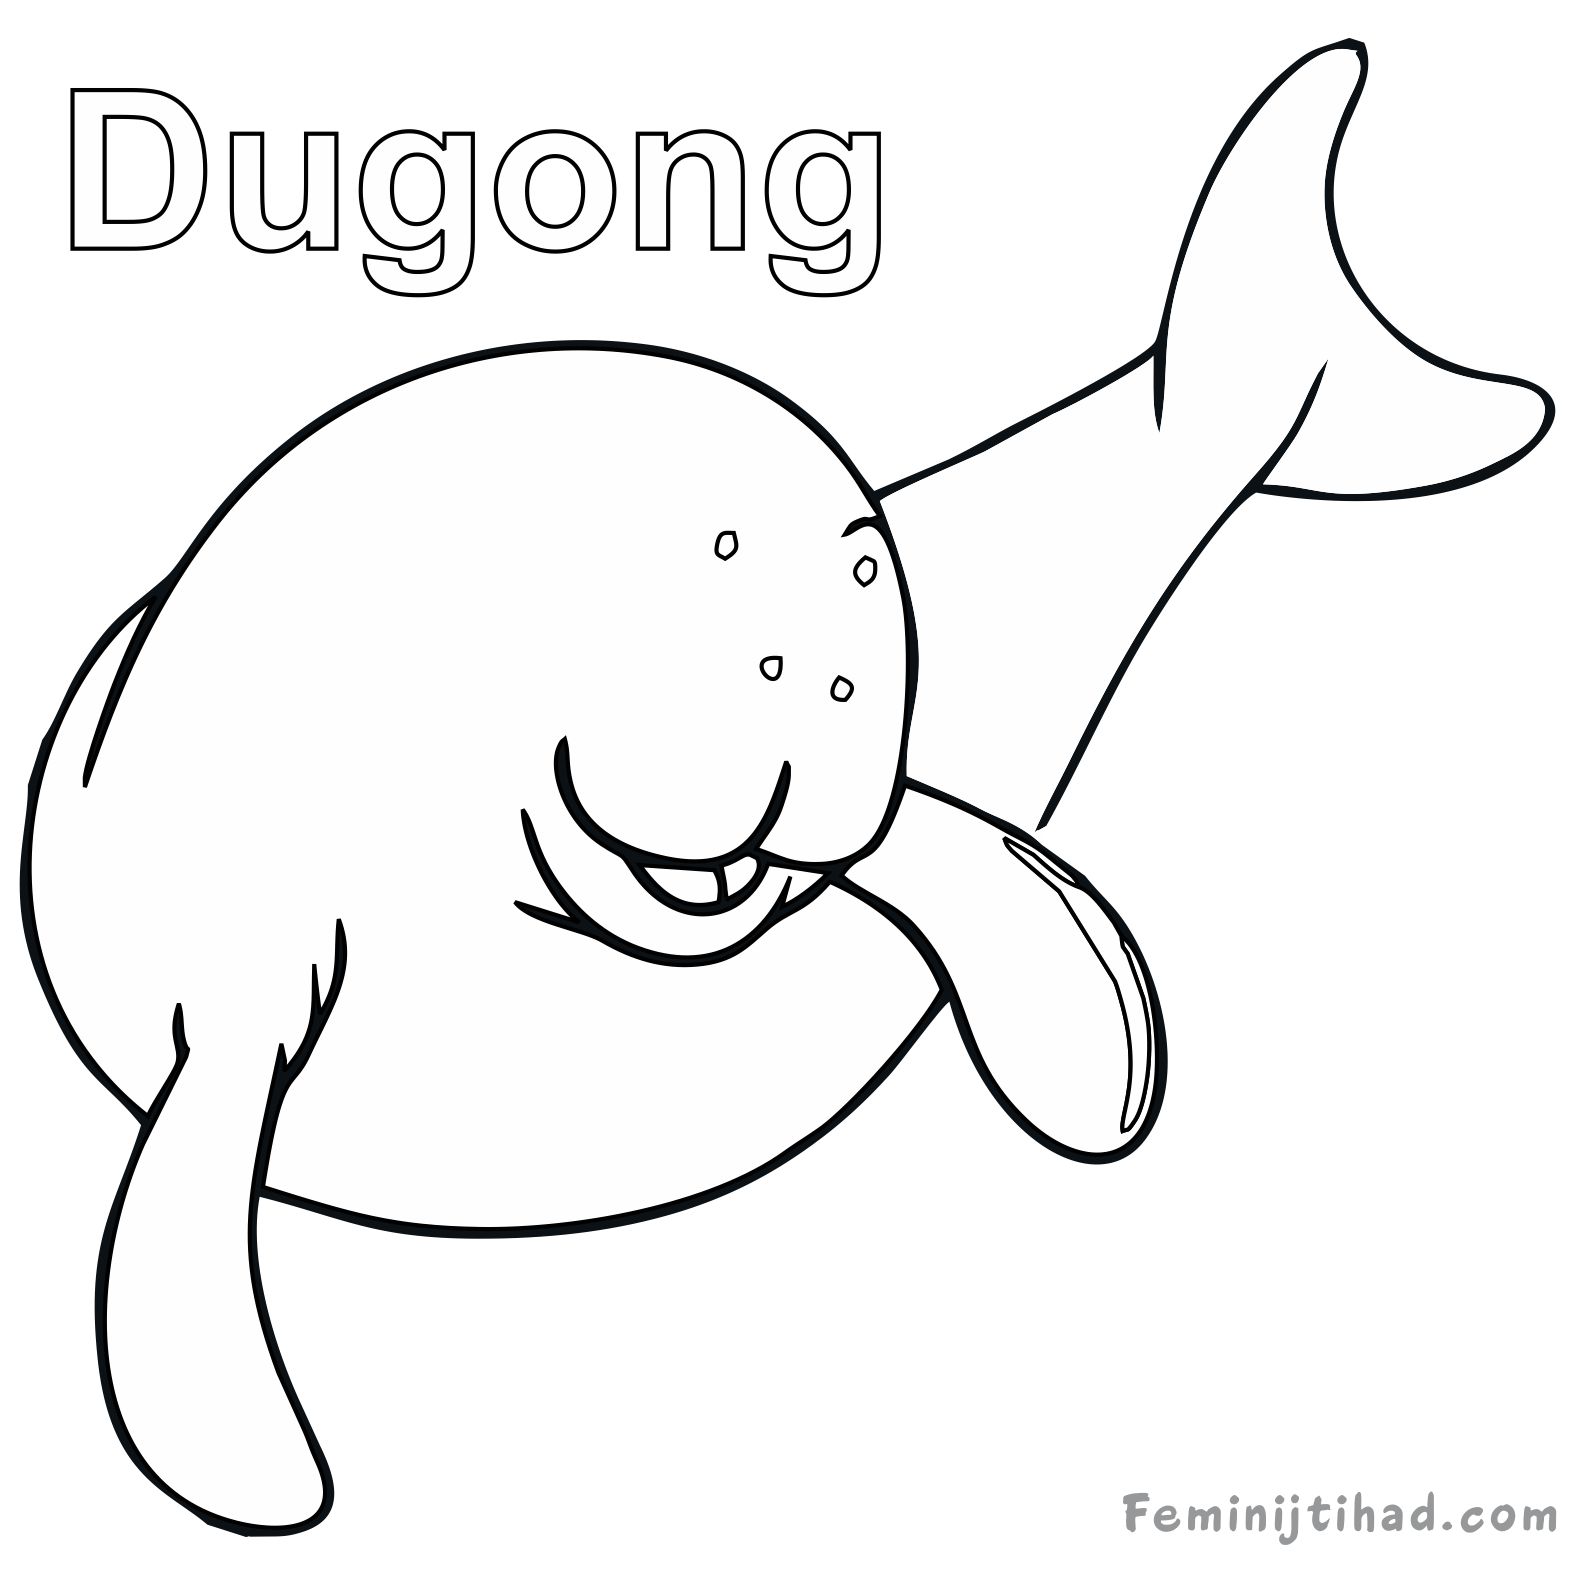 dugong coloring page printable